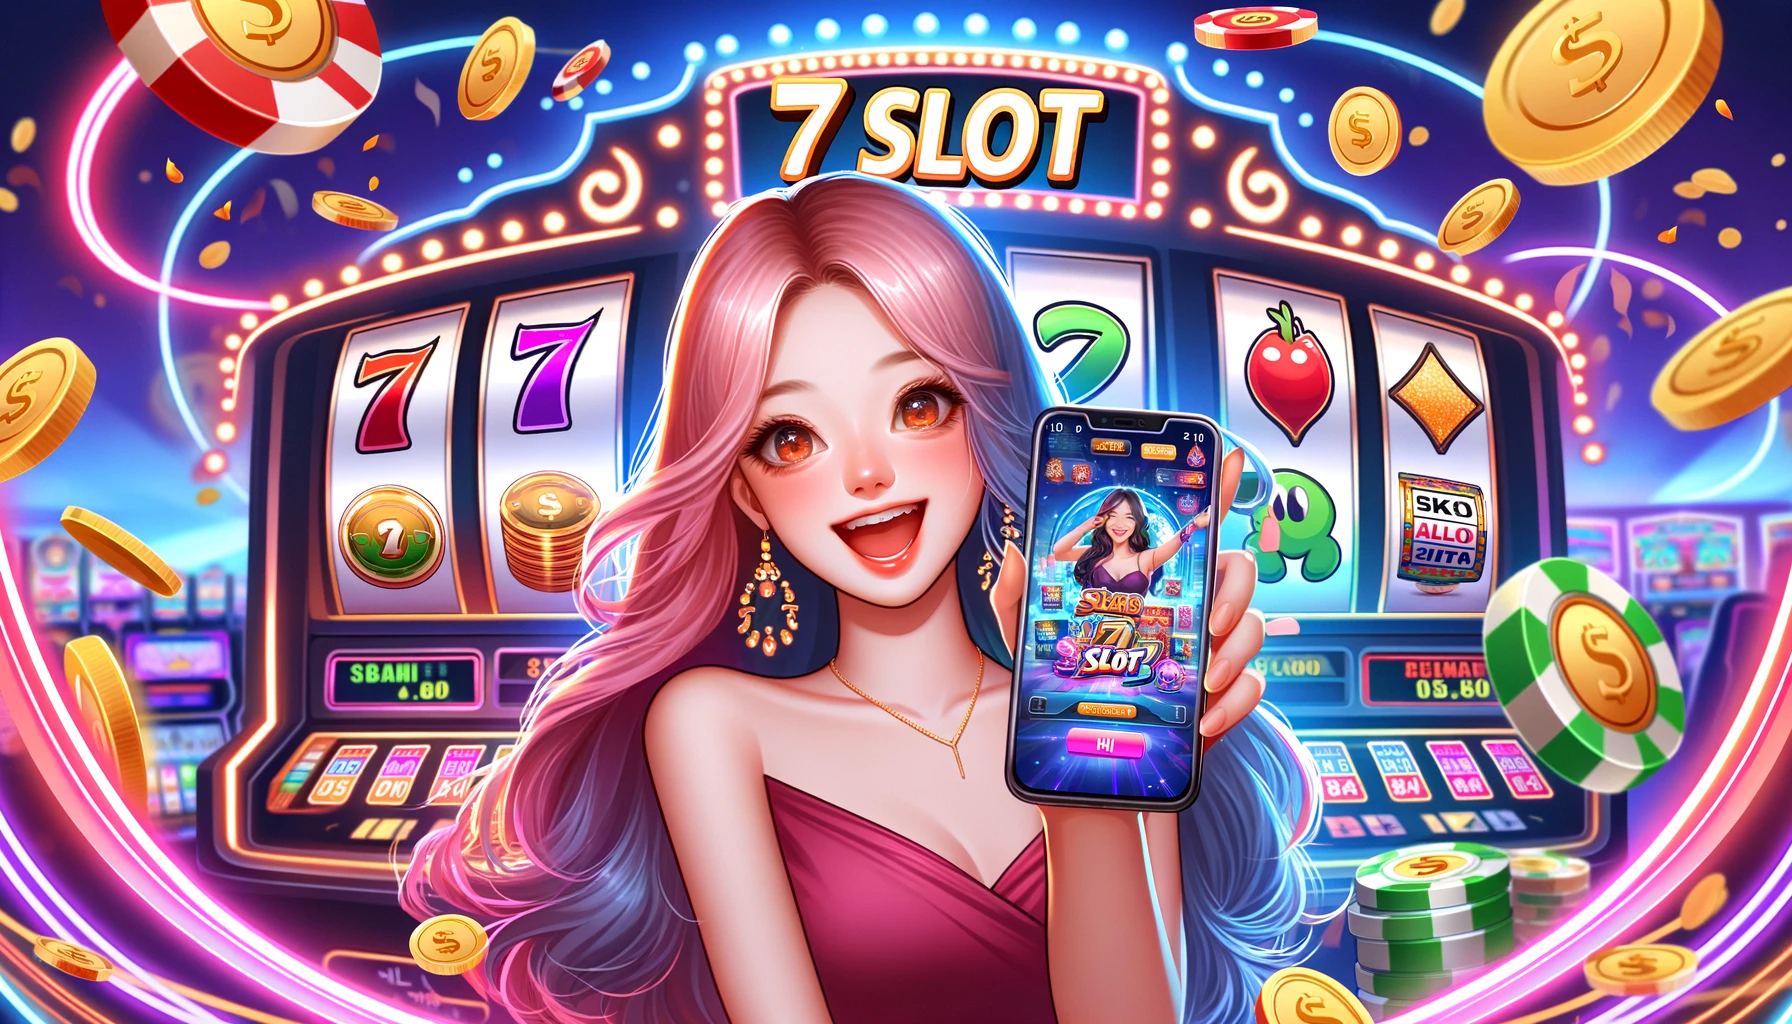 7slot Slot Game Online Malaysia